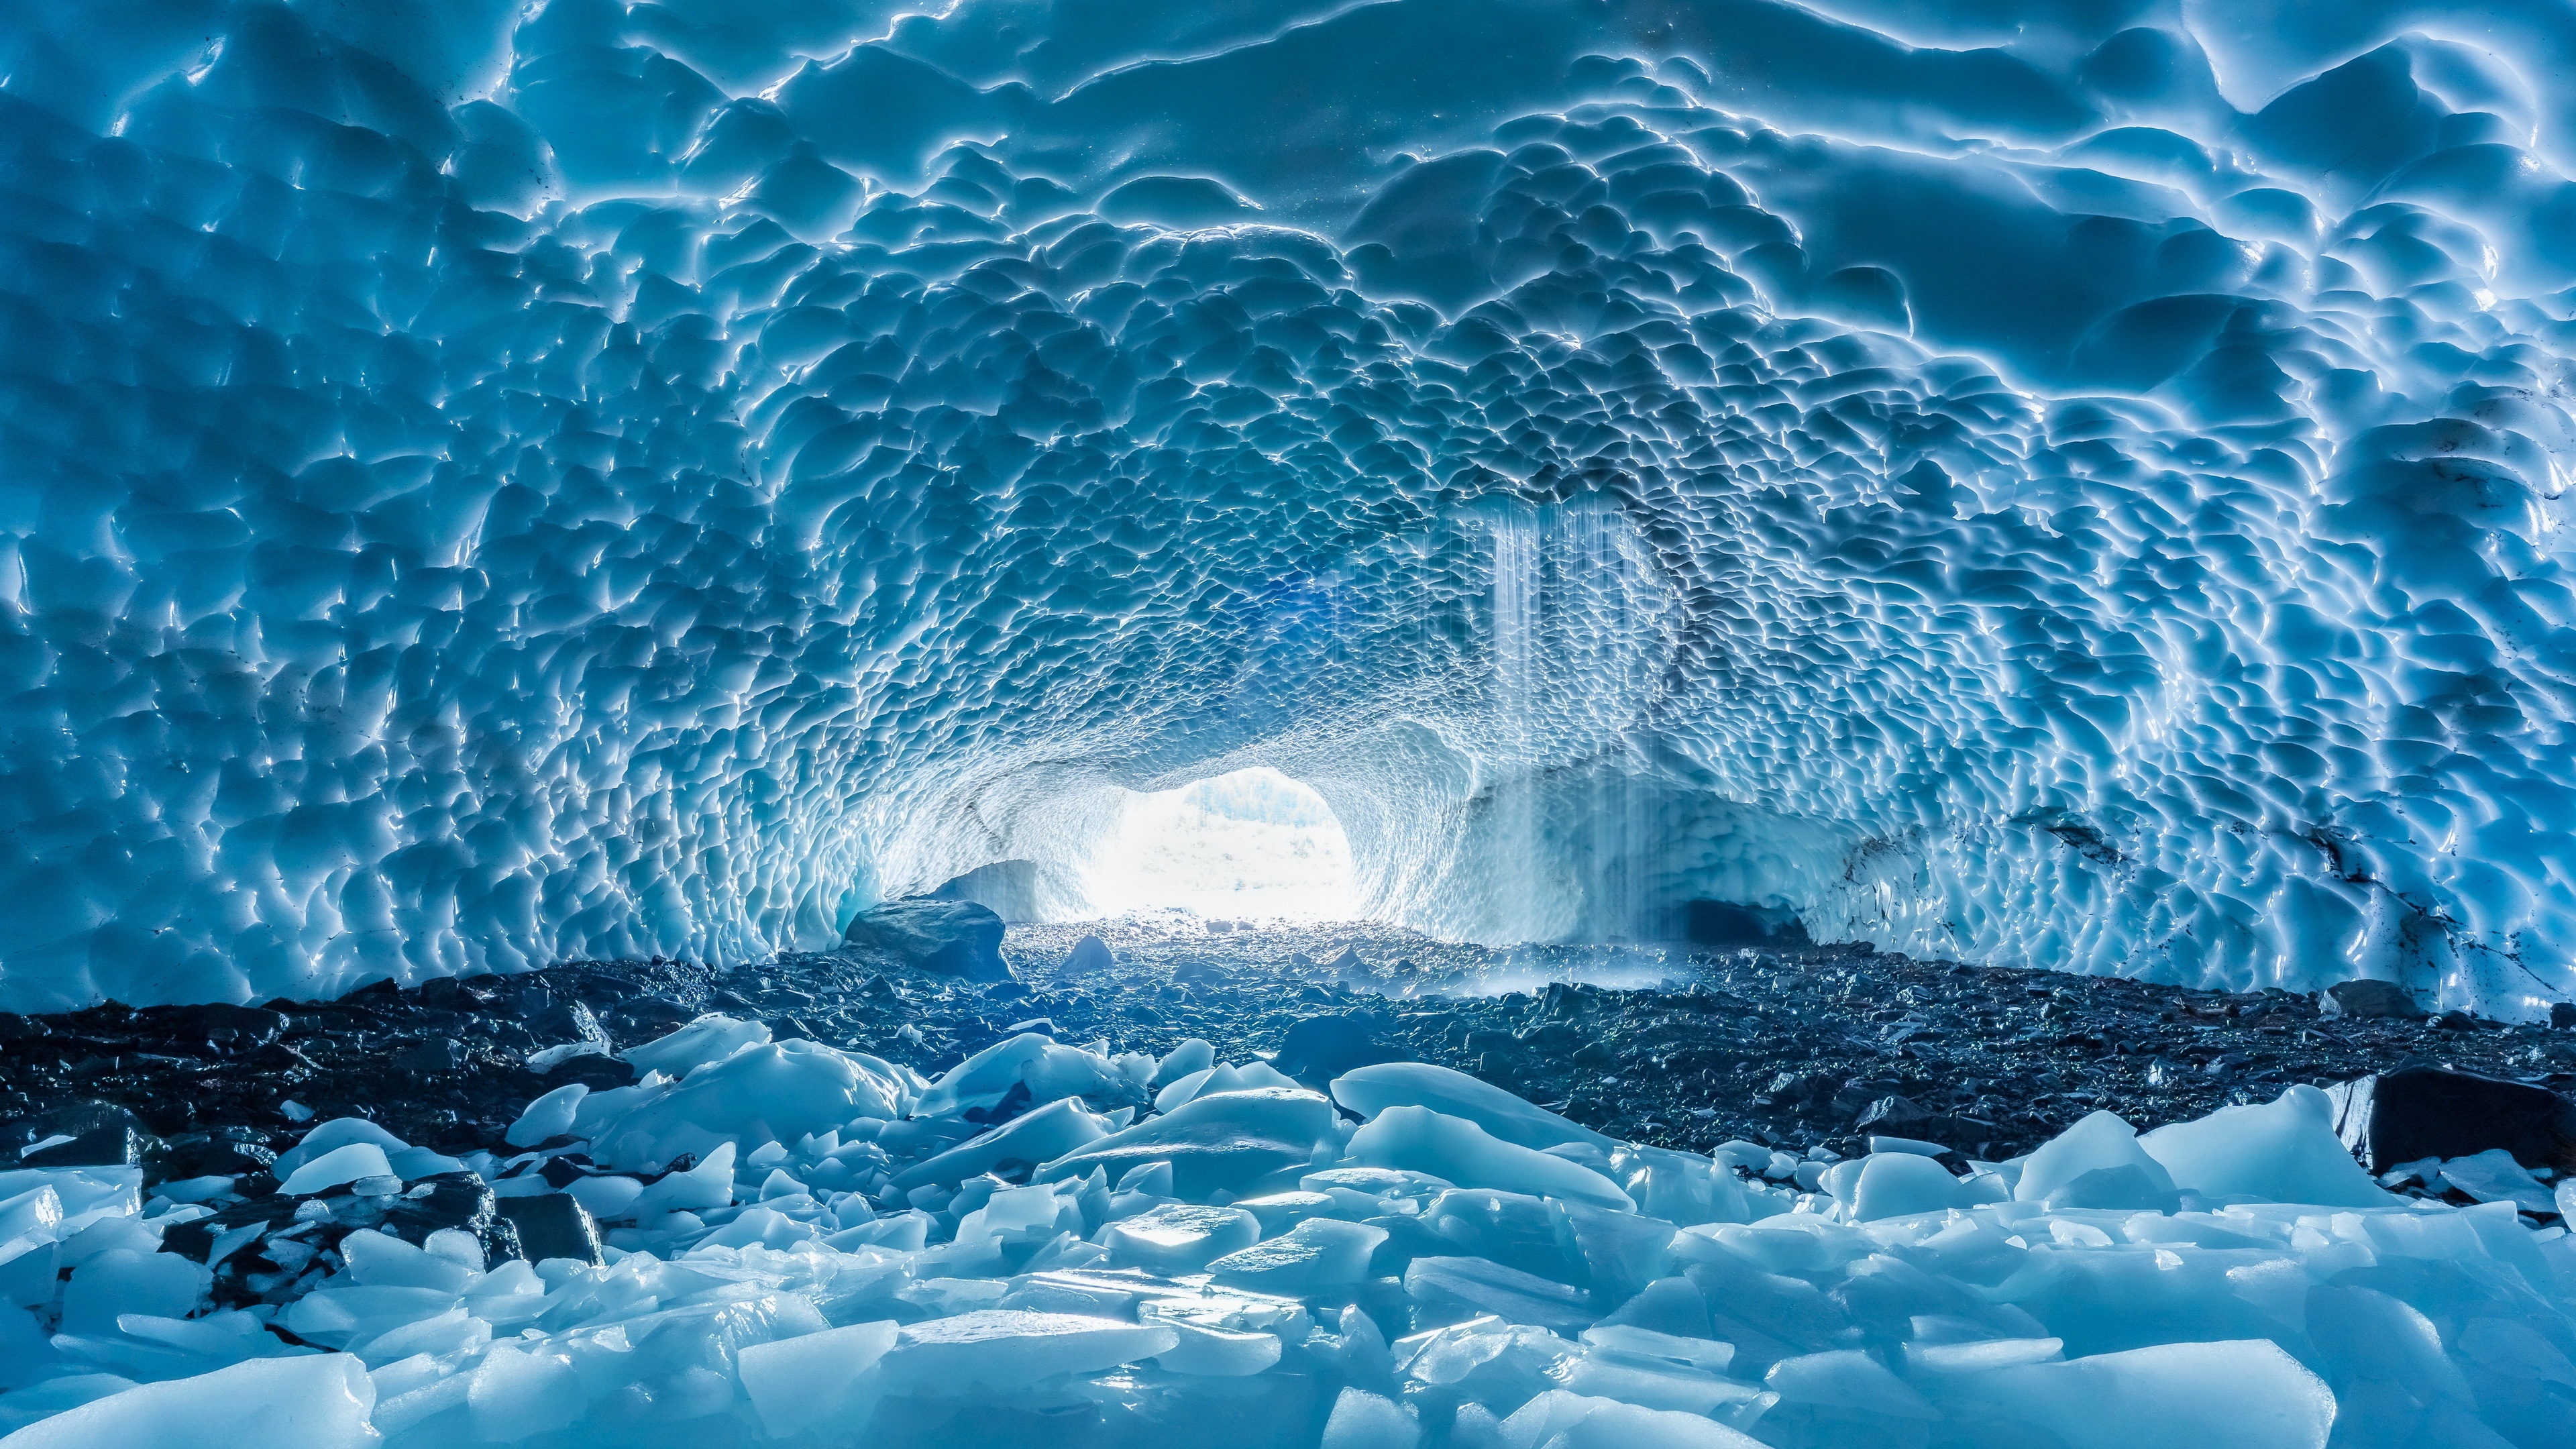 Mysterious ice caves, Desktop wallpaper beauty, Frozen landscapes, Nature's hidden wonders, 3840x2160 4K Desktop